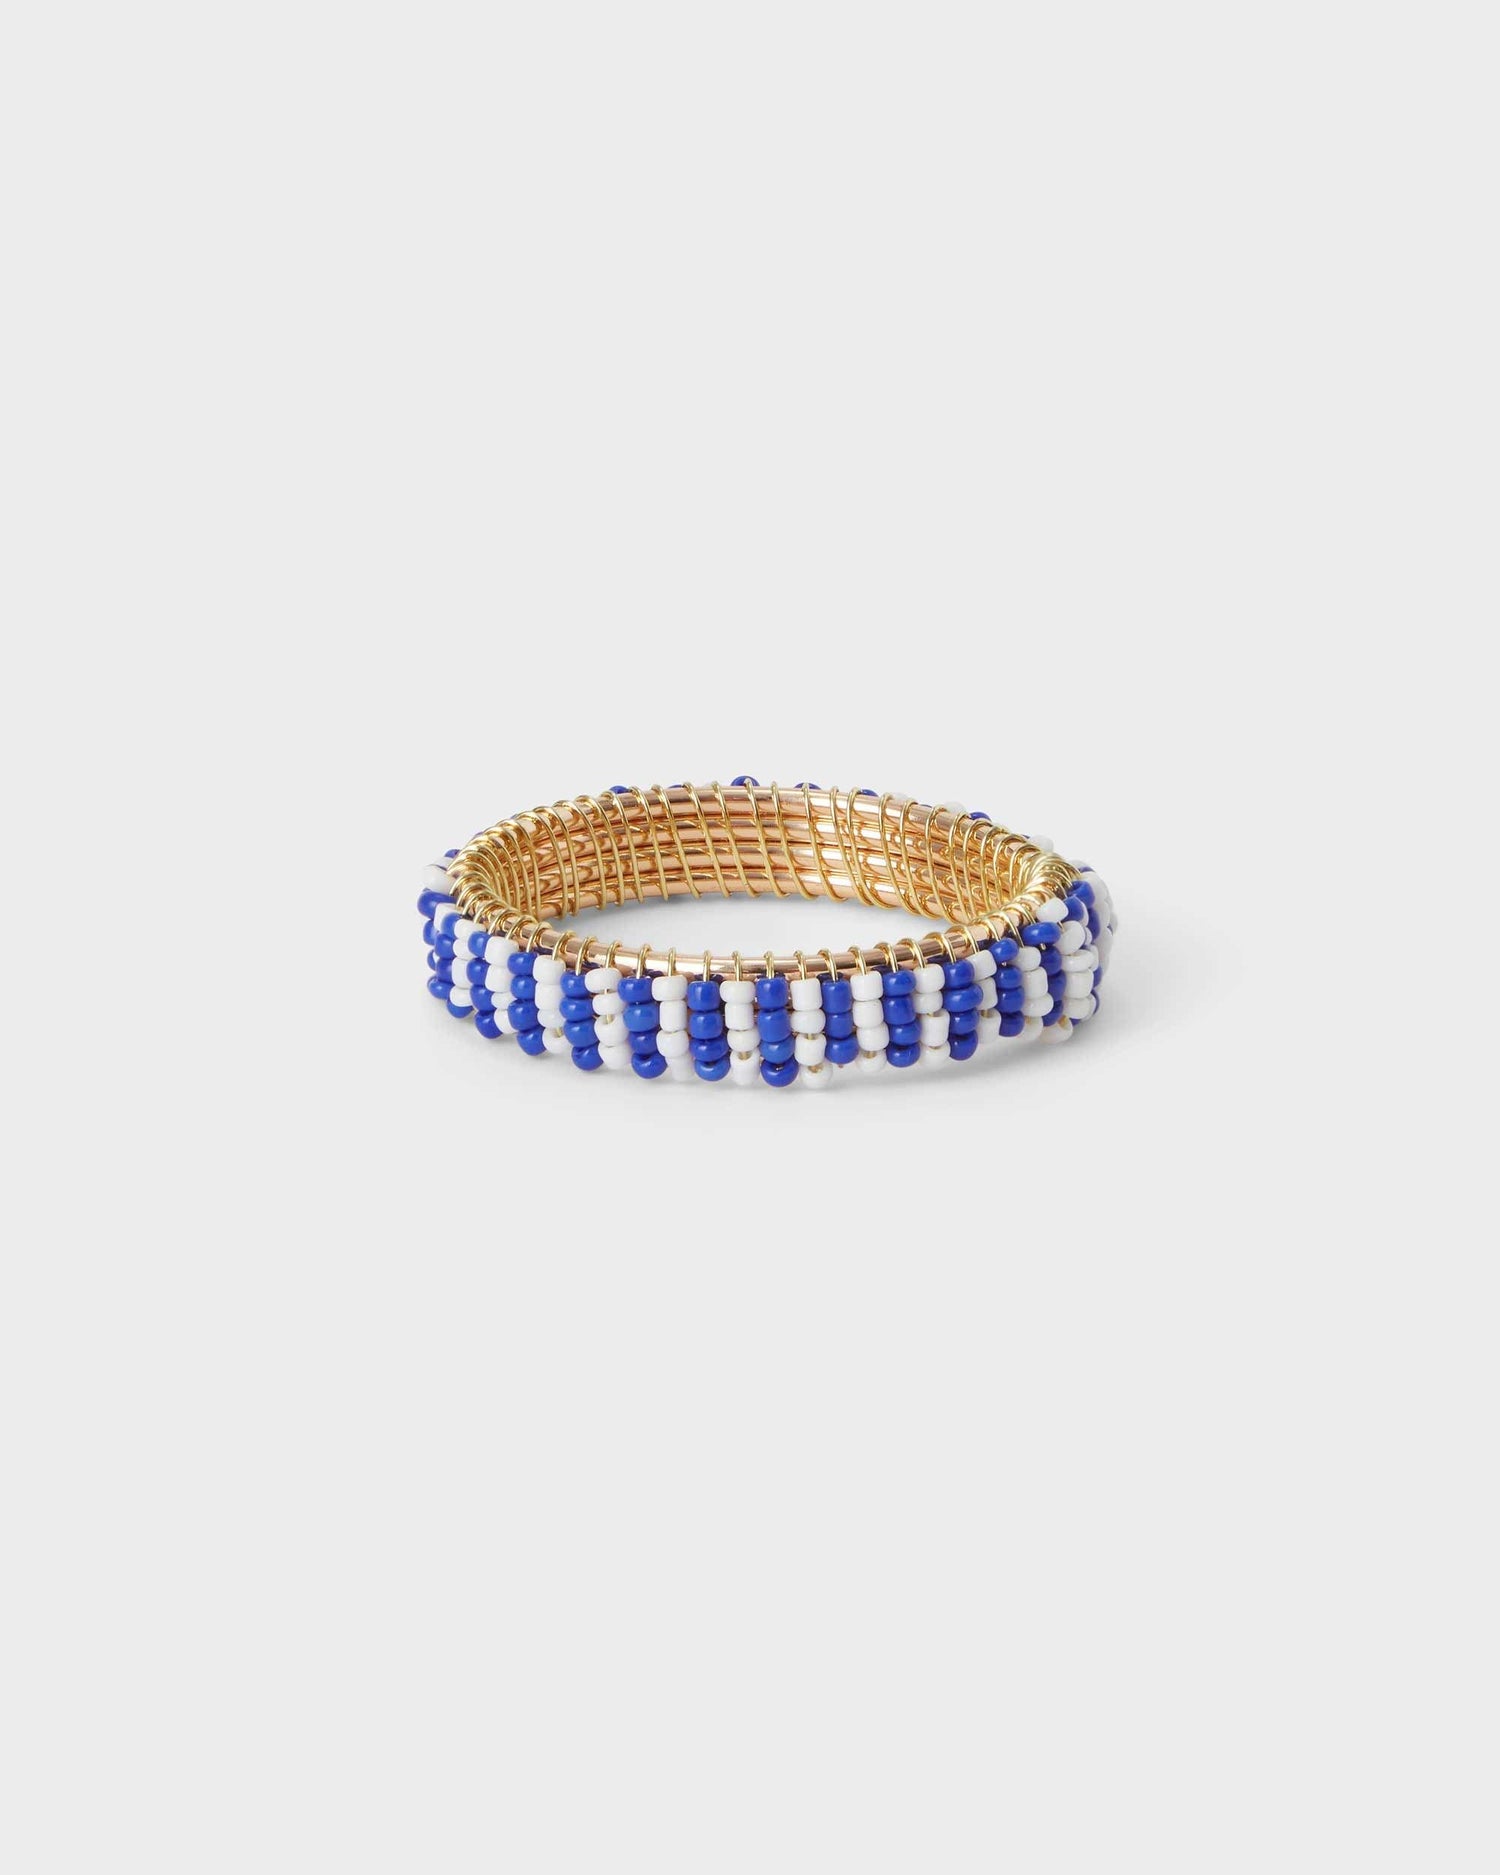 Napkin Ring - Blue and White beads - Von Home